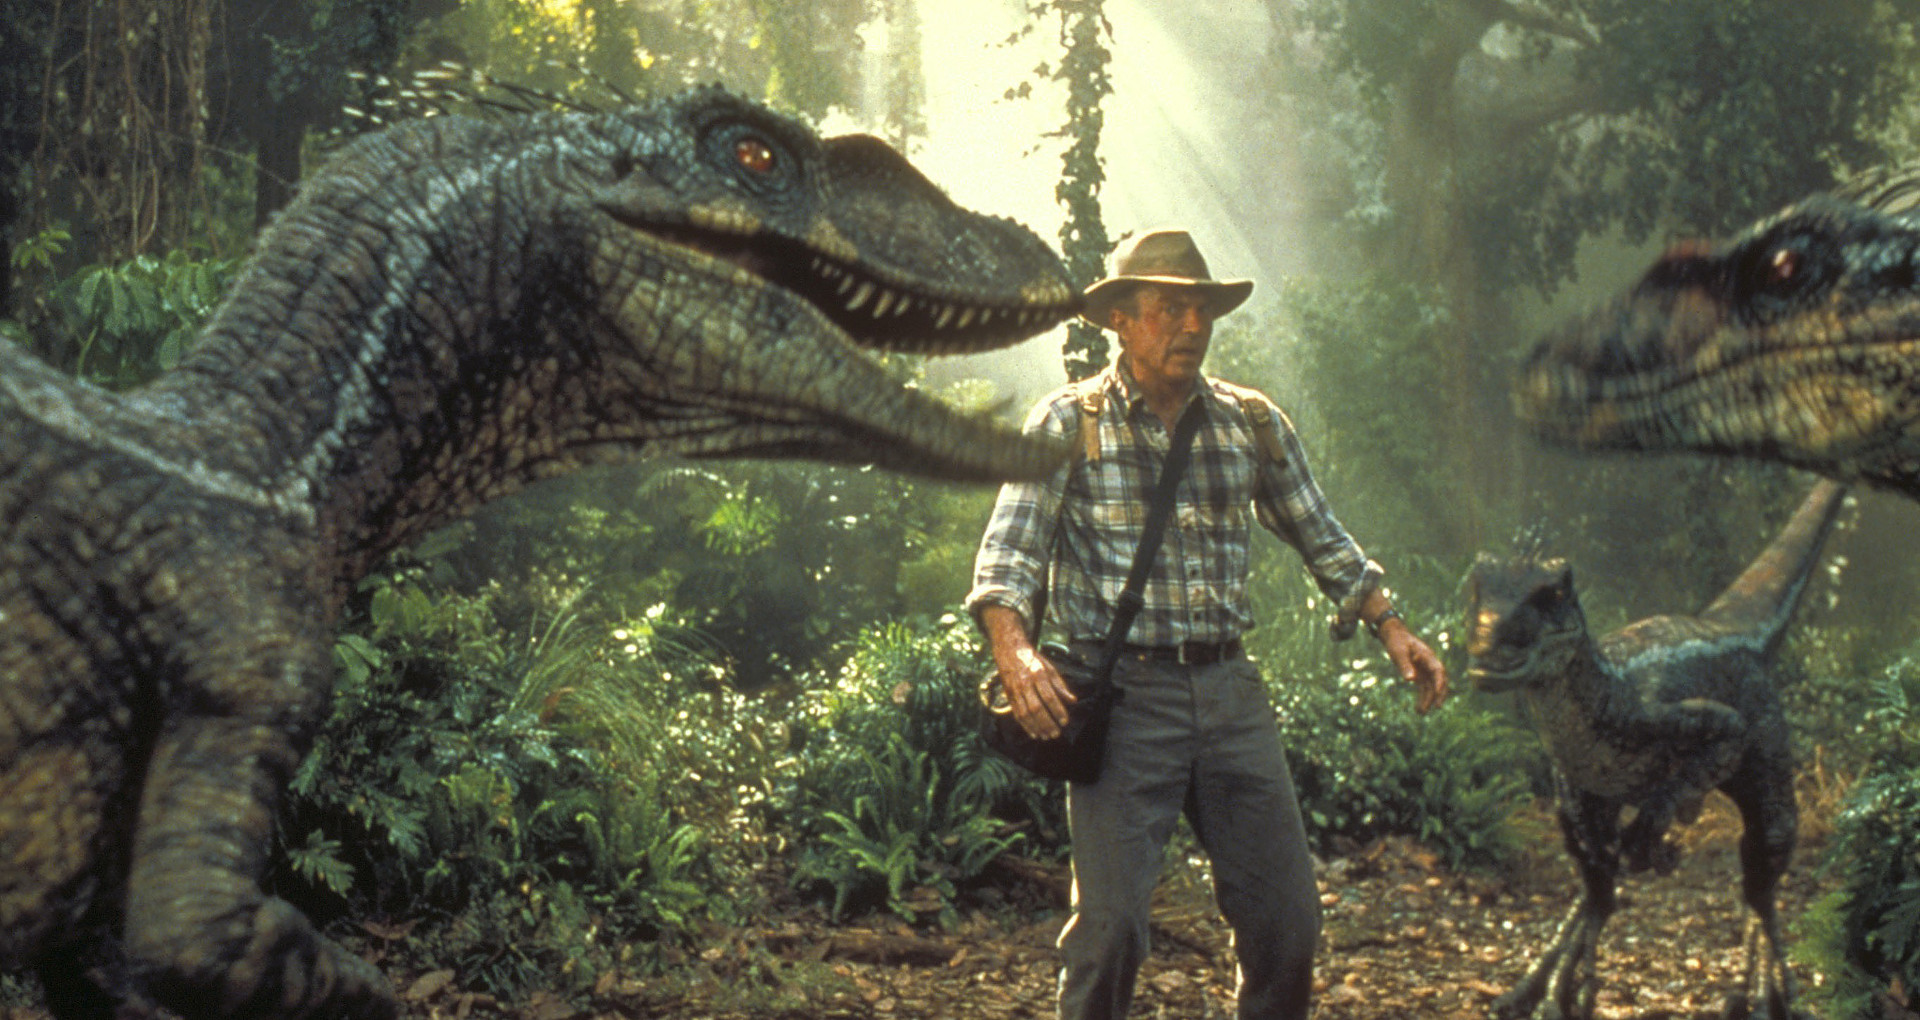 The 10 Best Movie Dinosaurs - IFC